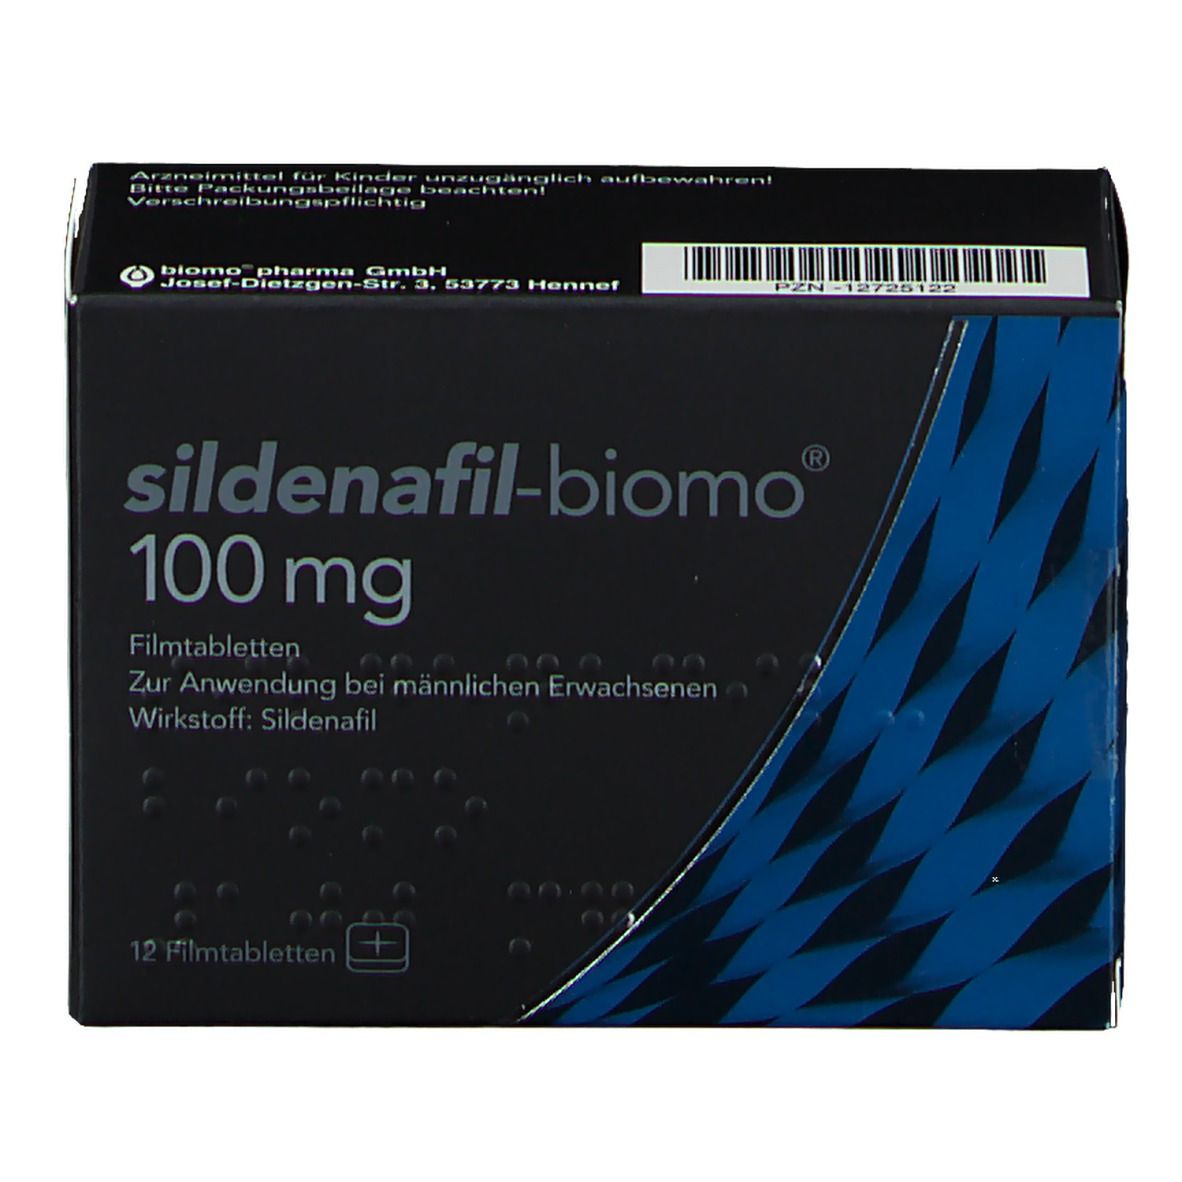 sildenafil-biomo® 100 mg